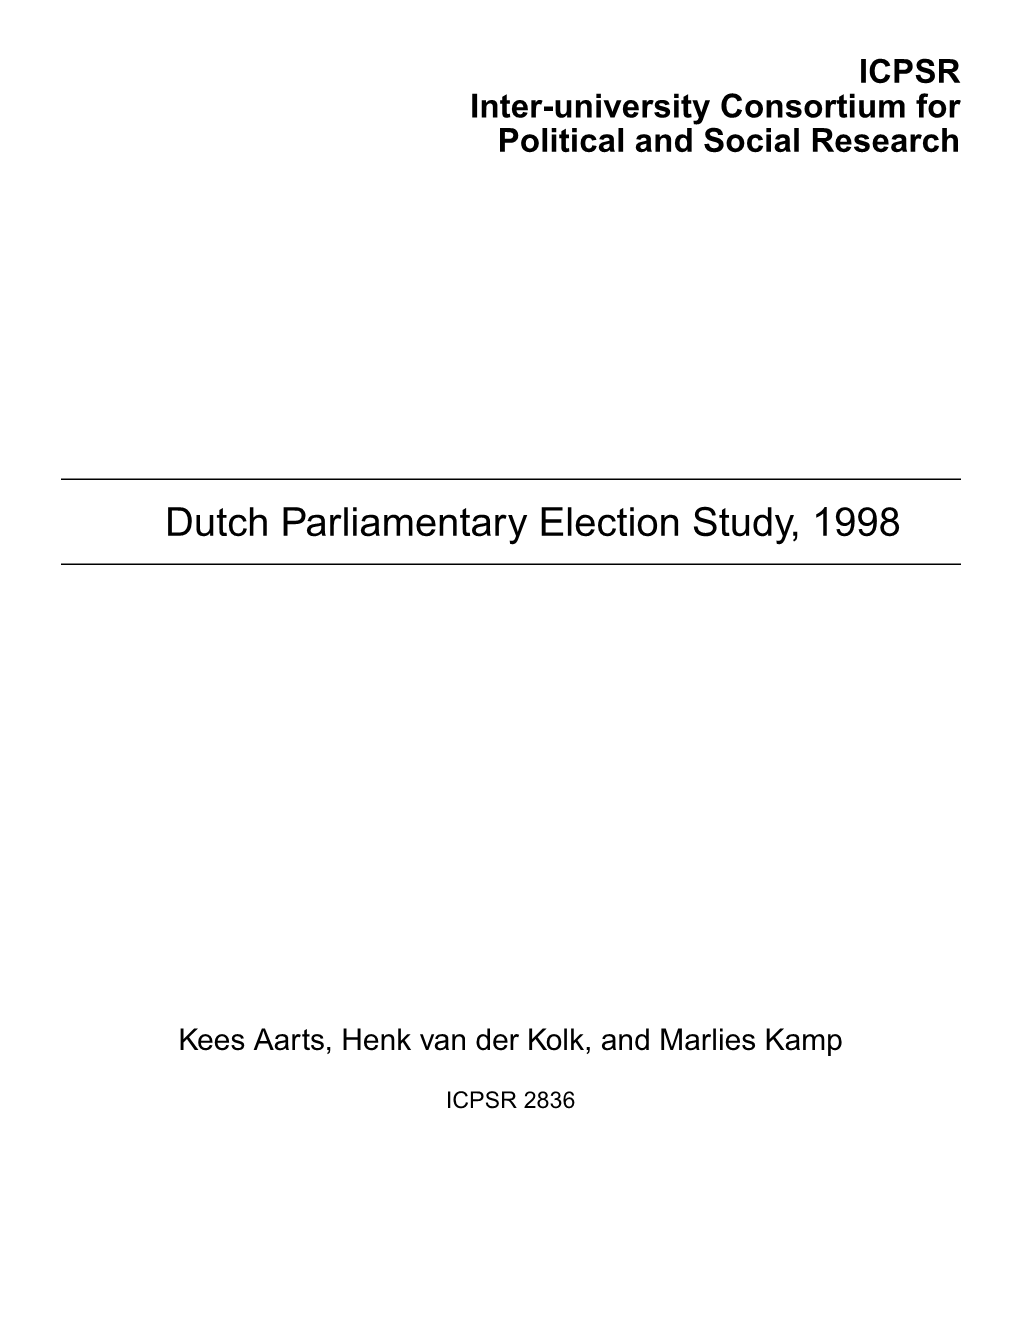 Dutch Parliamentary Election Study, 1998